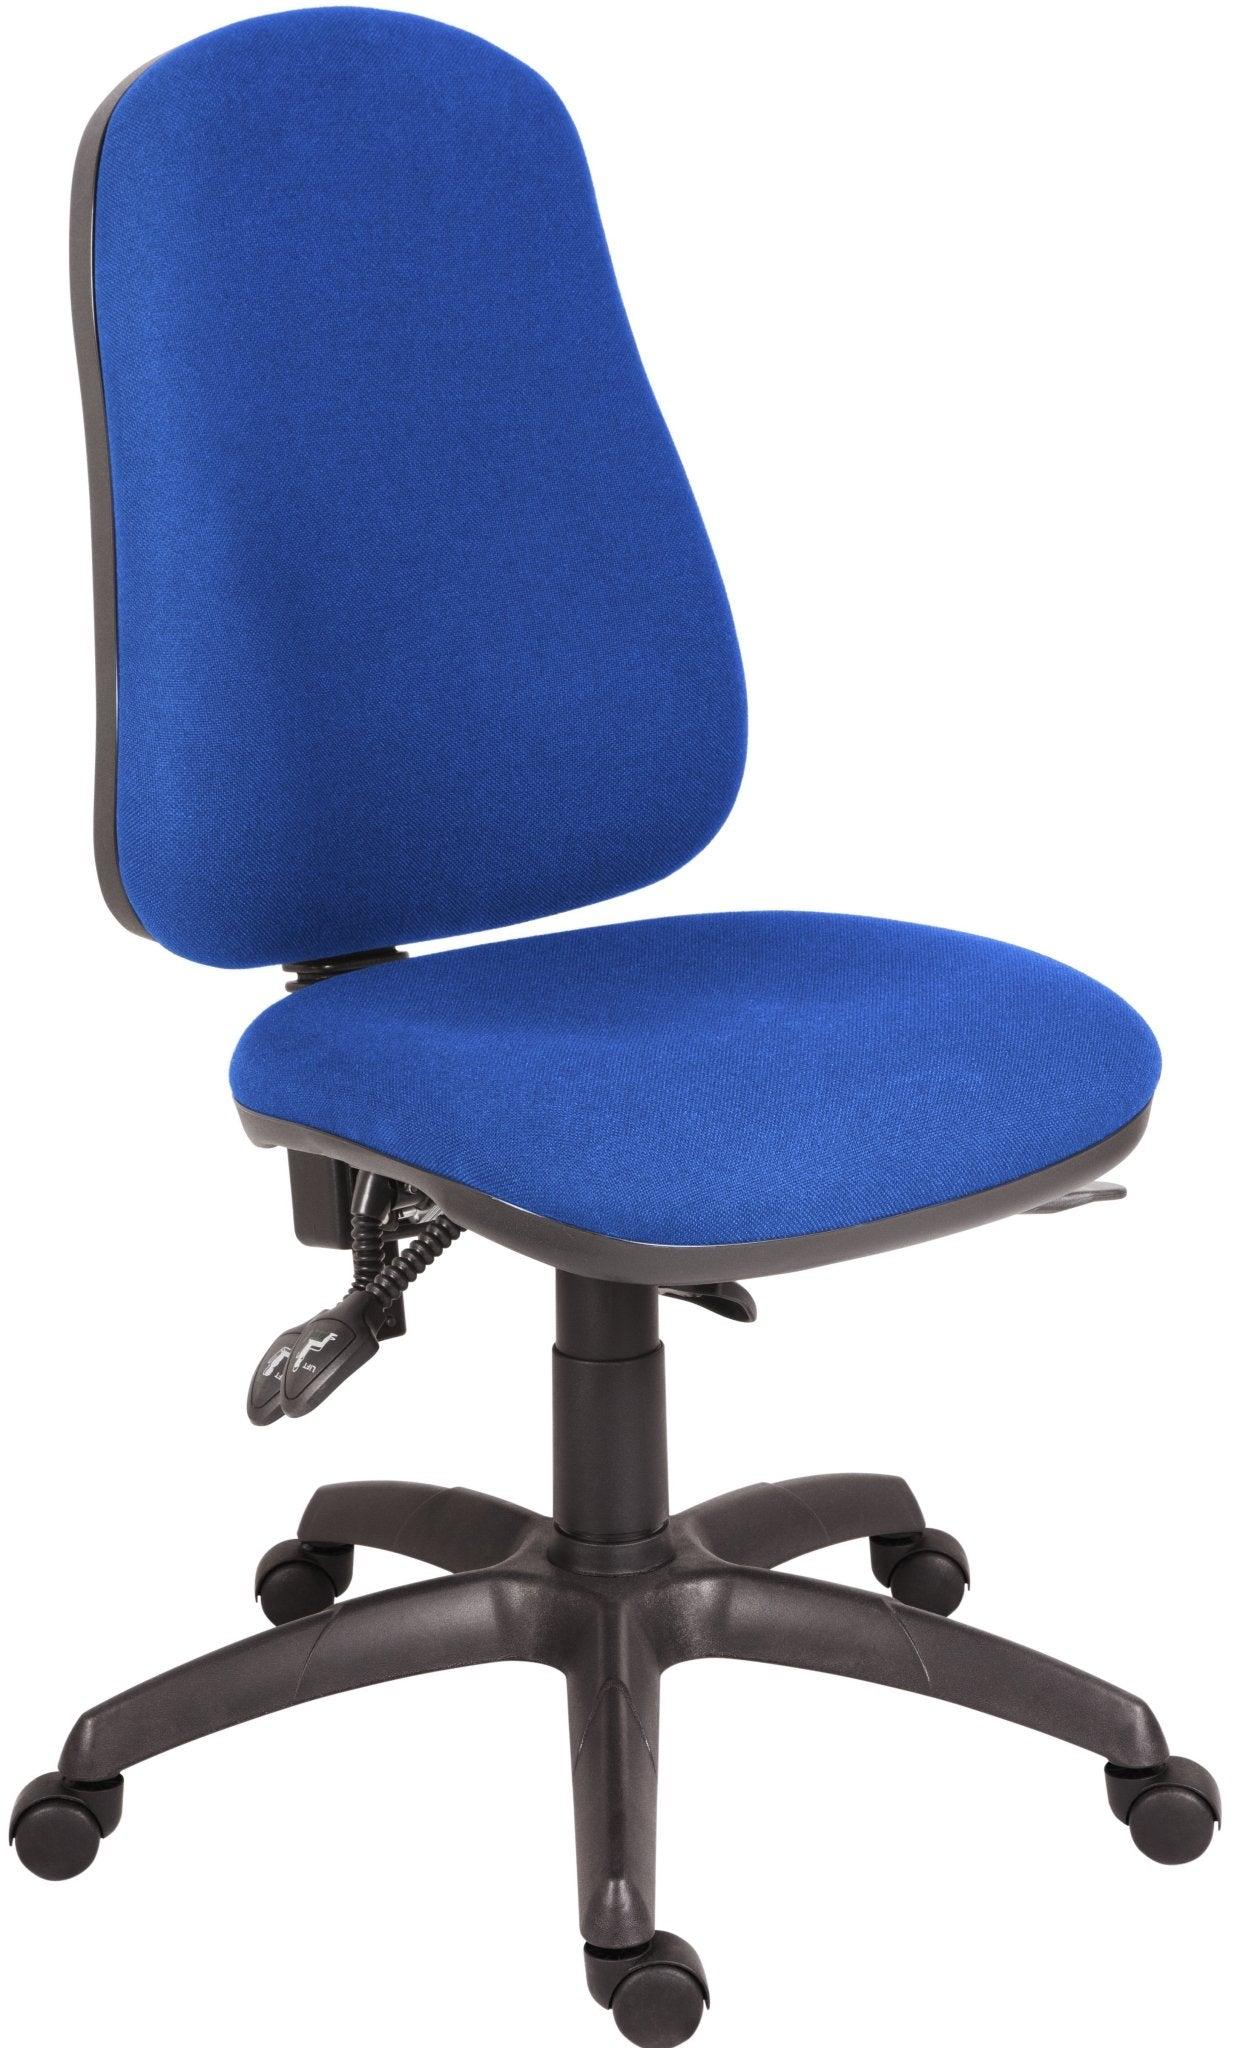 Ergo comfort office chair (blue) - crimblefest furniture - image 1